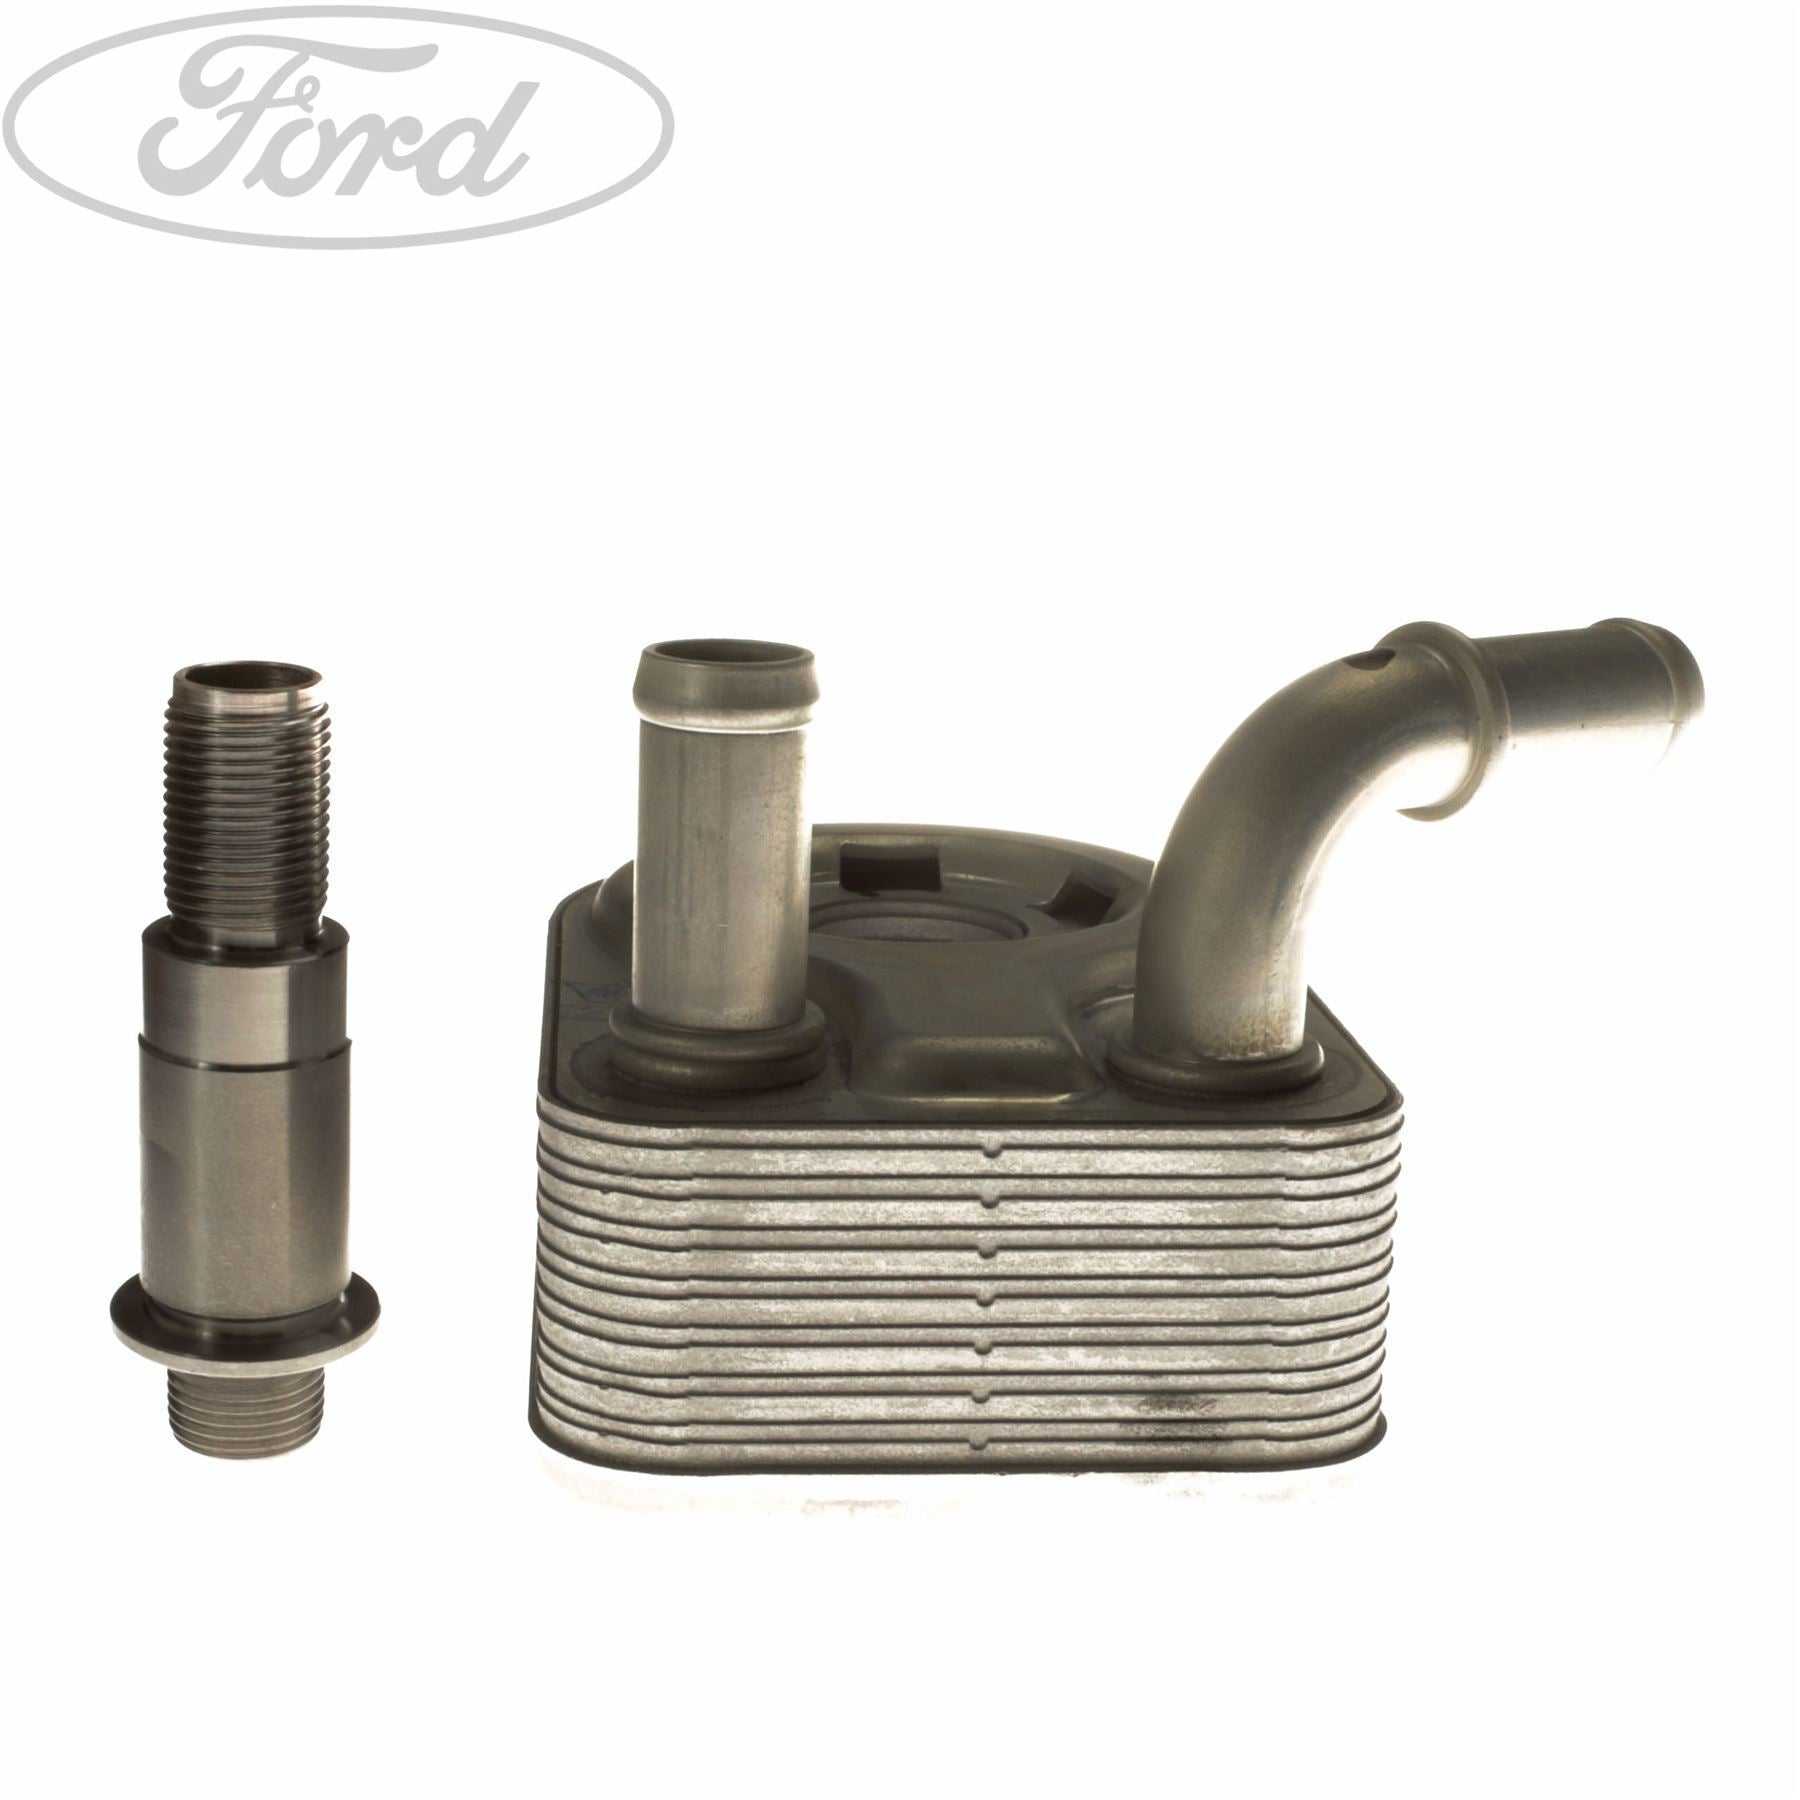 Ford, ZETEC 1.4L SIGMA 1.6L PETROL ENGINE OIL COOLER